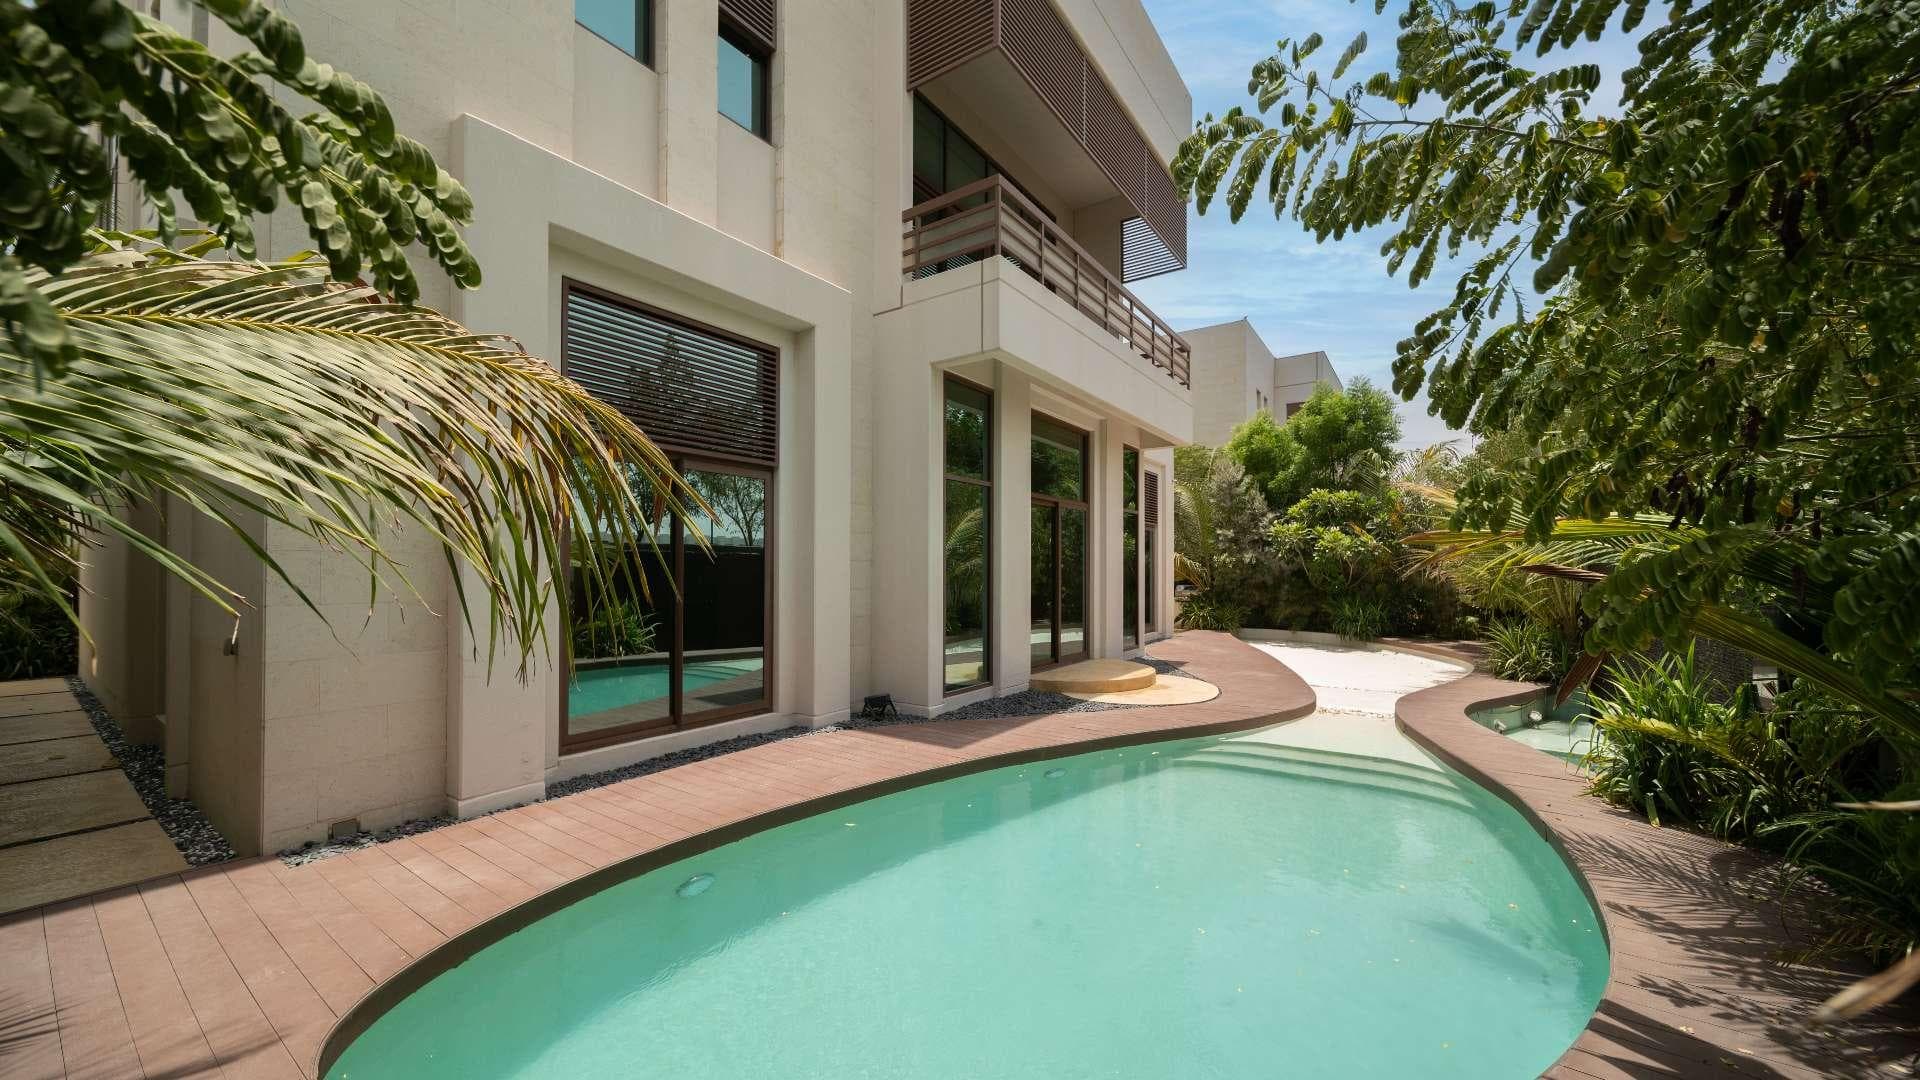 5 Bedroom Villa For Rent Meydan Gated Community Lp13586 1b9a3230b4206000.jpg